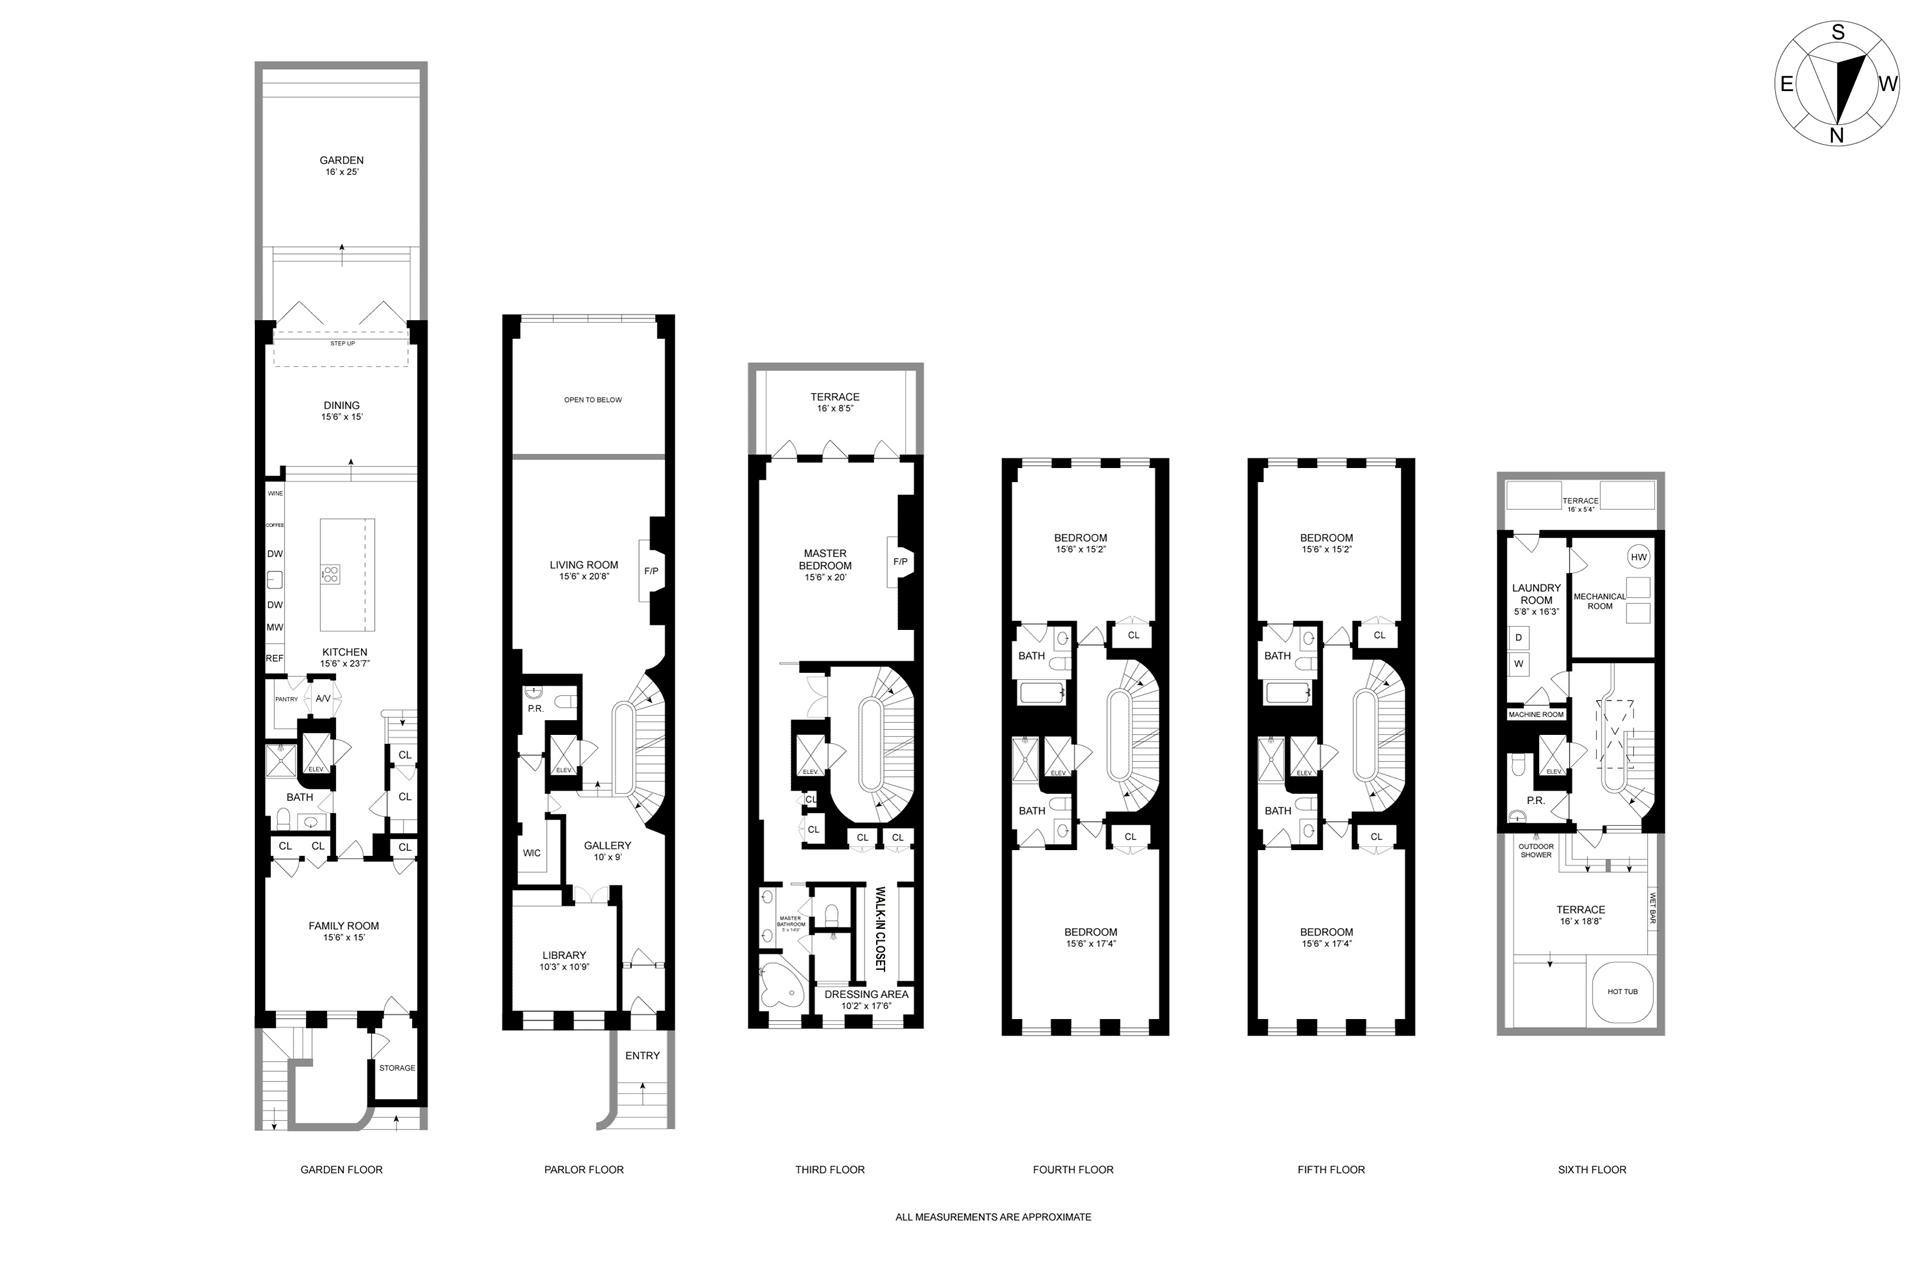 Floorplan for 130 East 71st Street